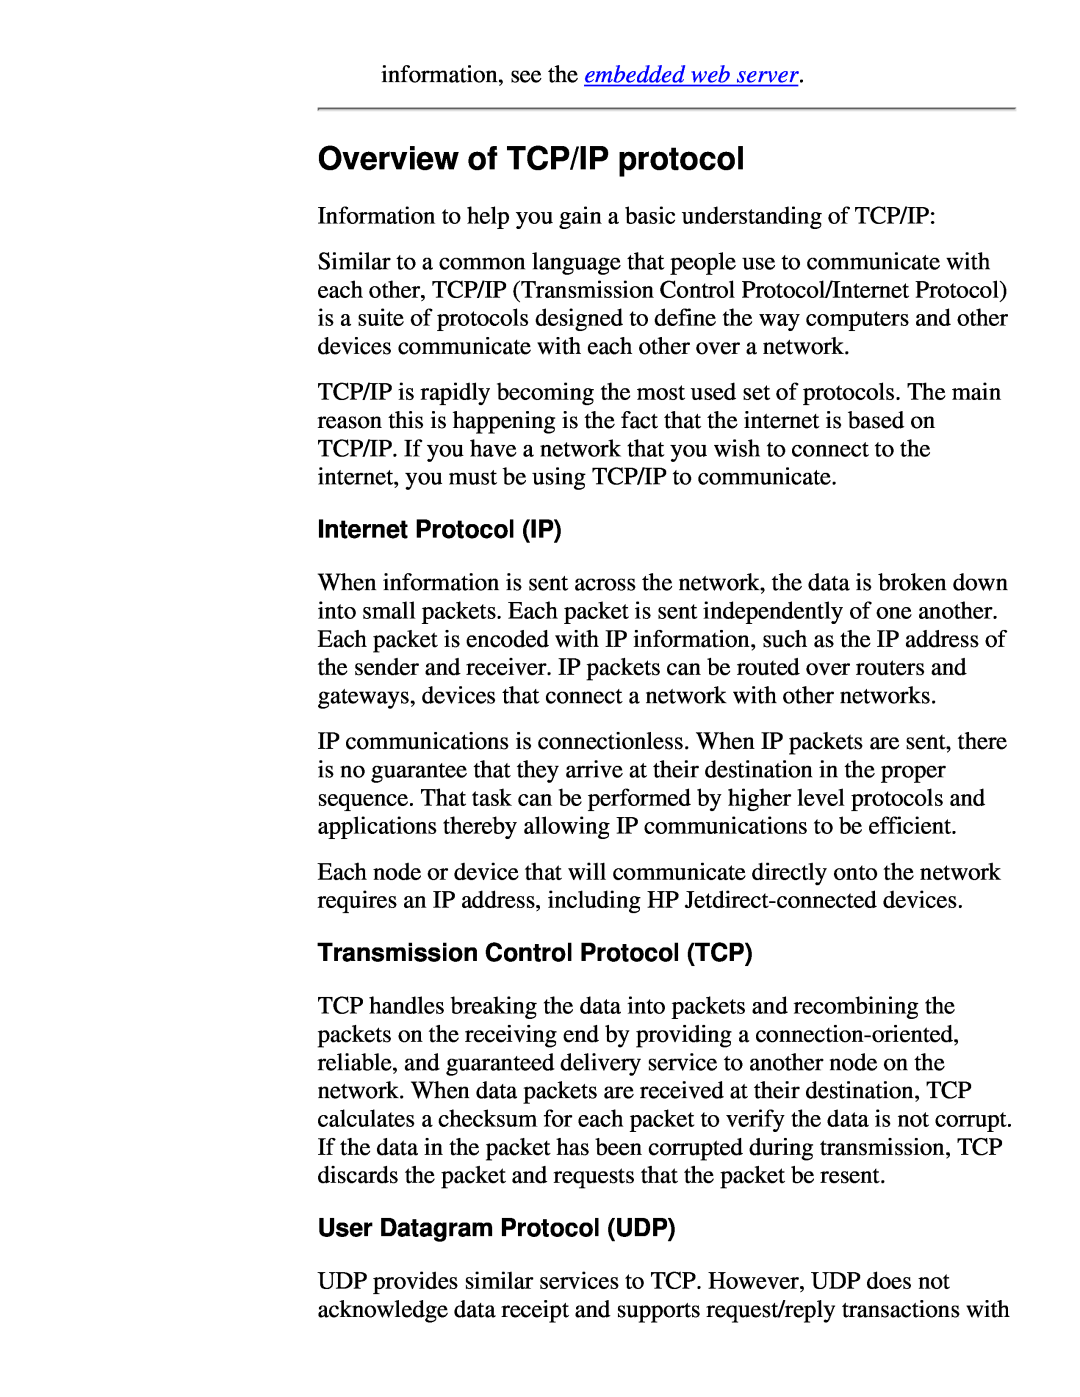 HP 310X Overview of TCP/IP protocol, Internet Protocol IP, Transmission Control Protocol TCP, User Datagram Protocol UDP 